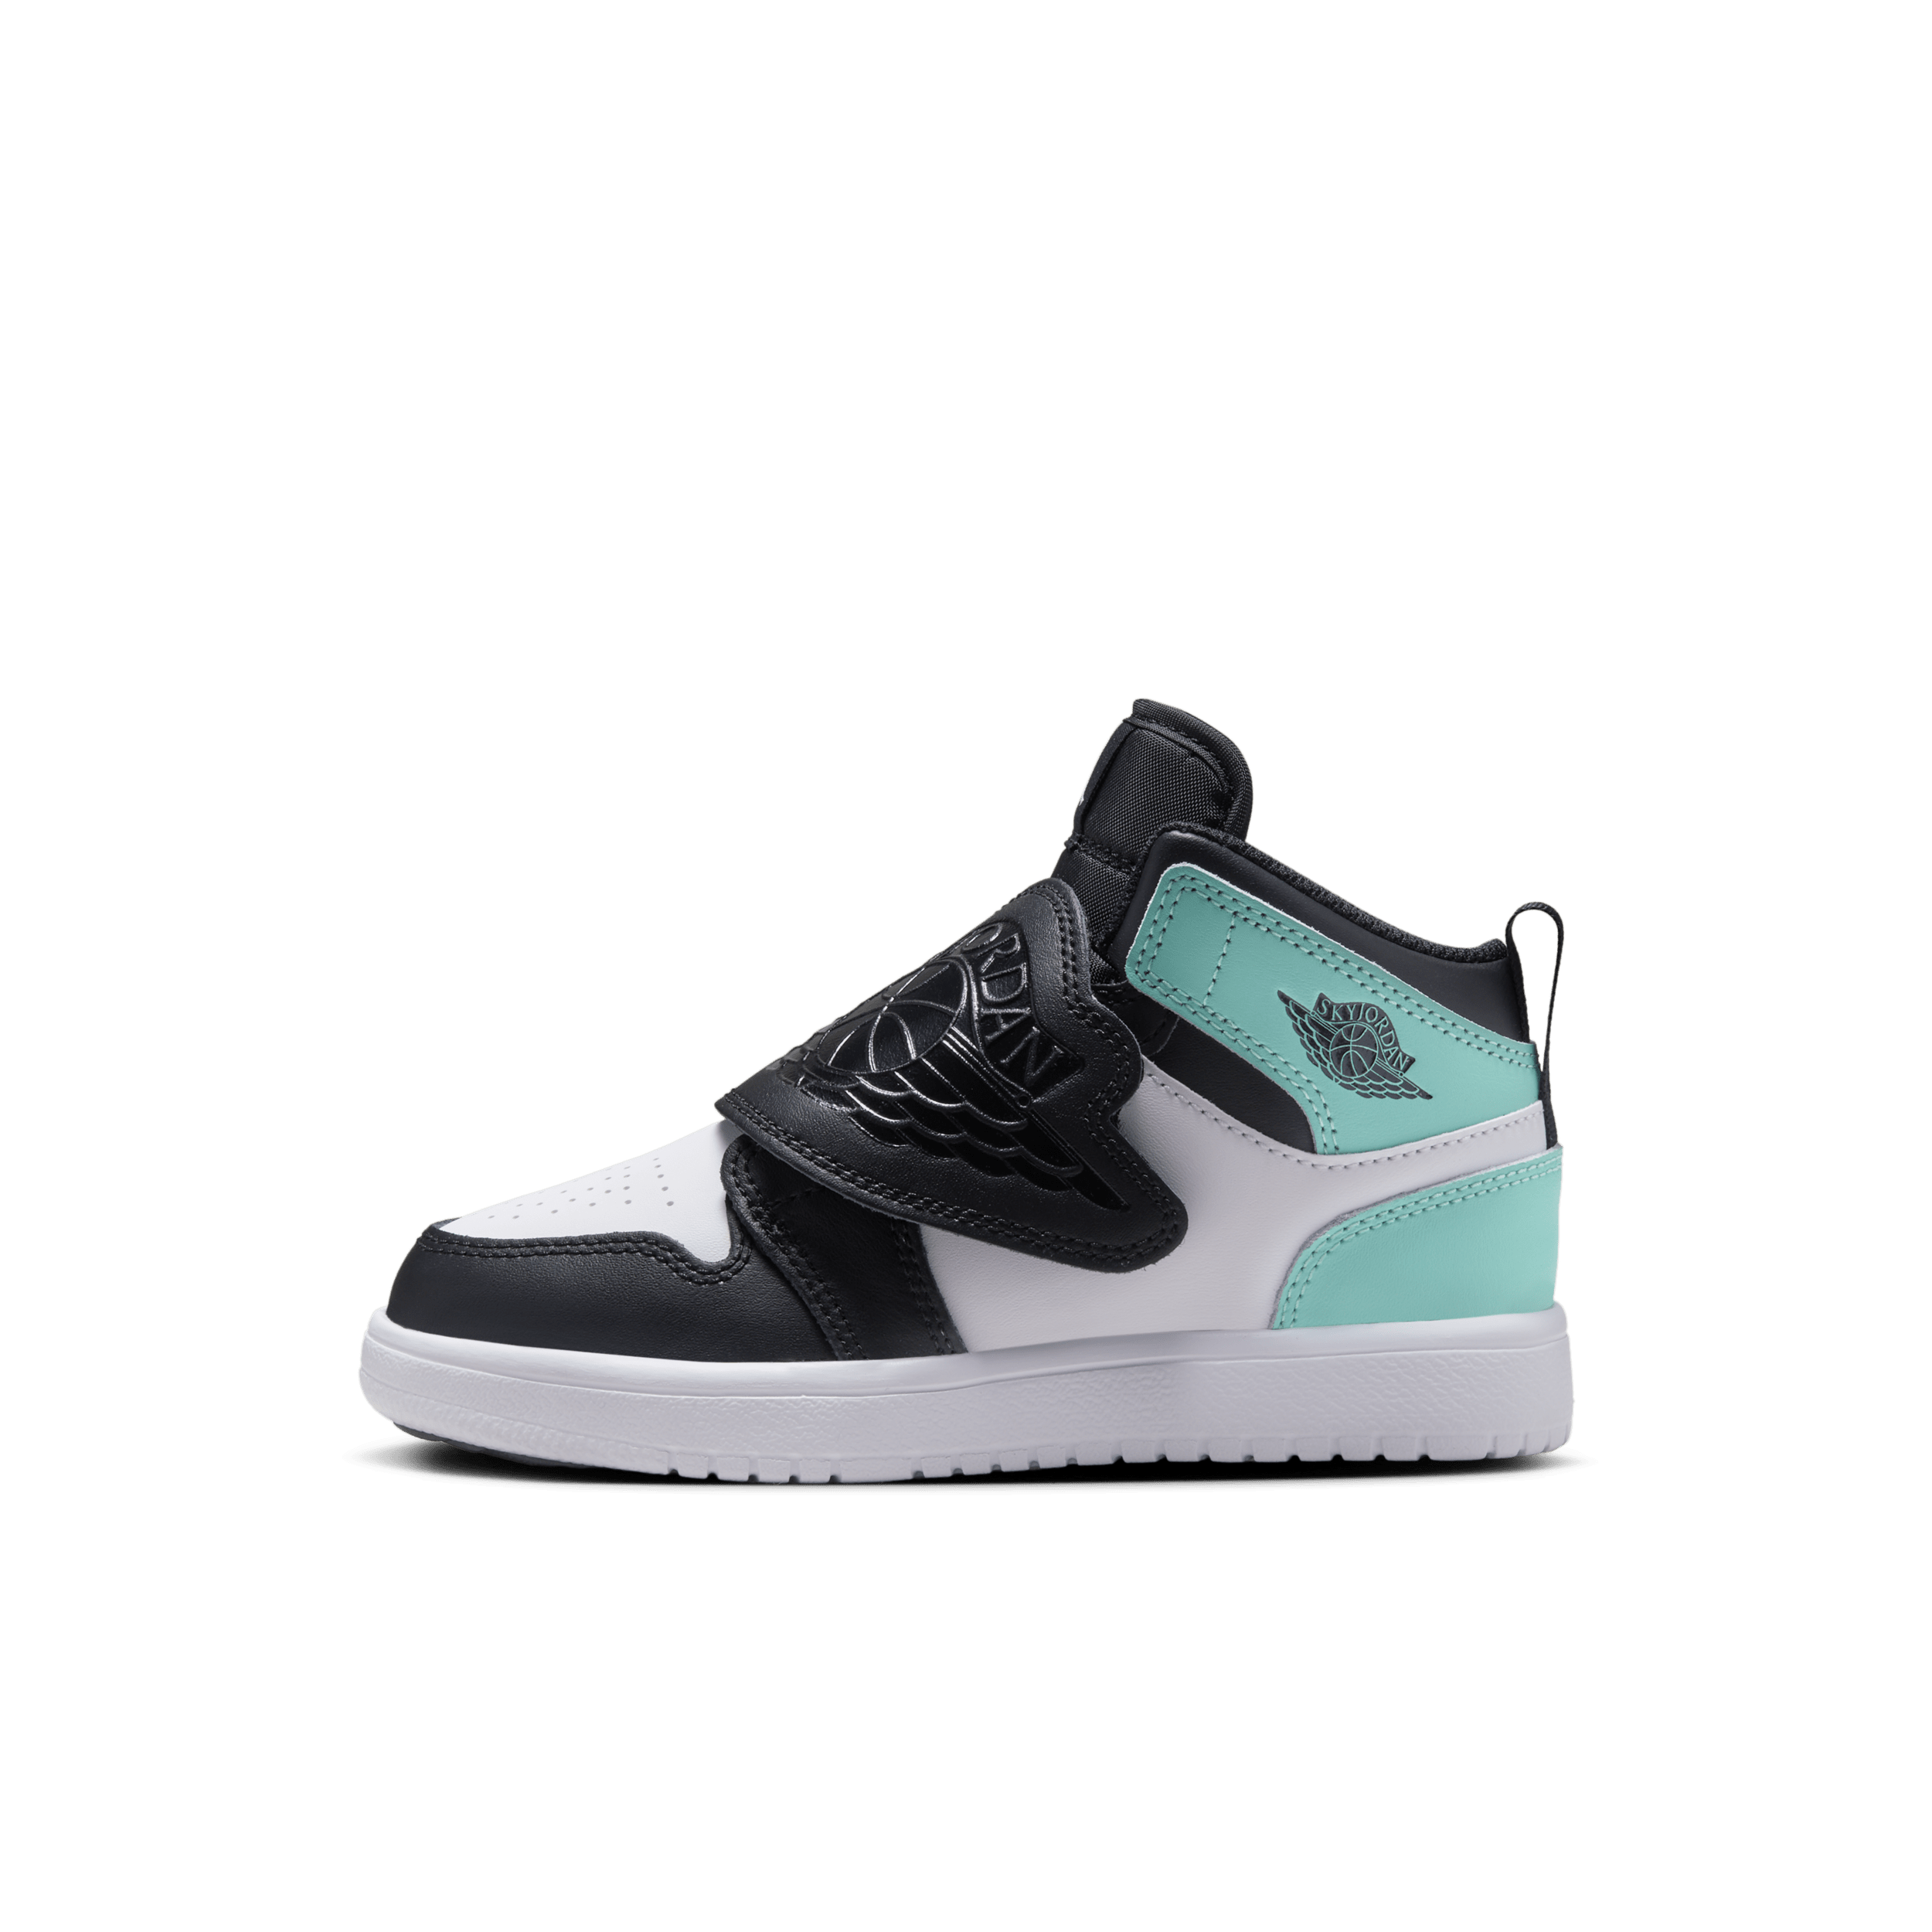 Nike Sky Jordan 1-sko til små børn - sort